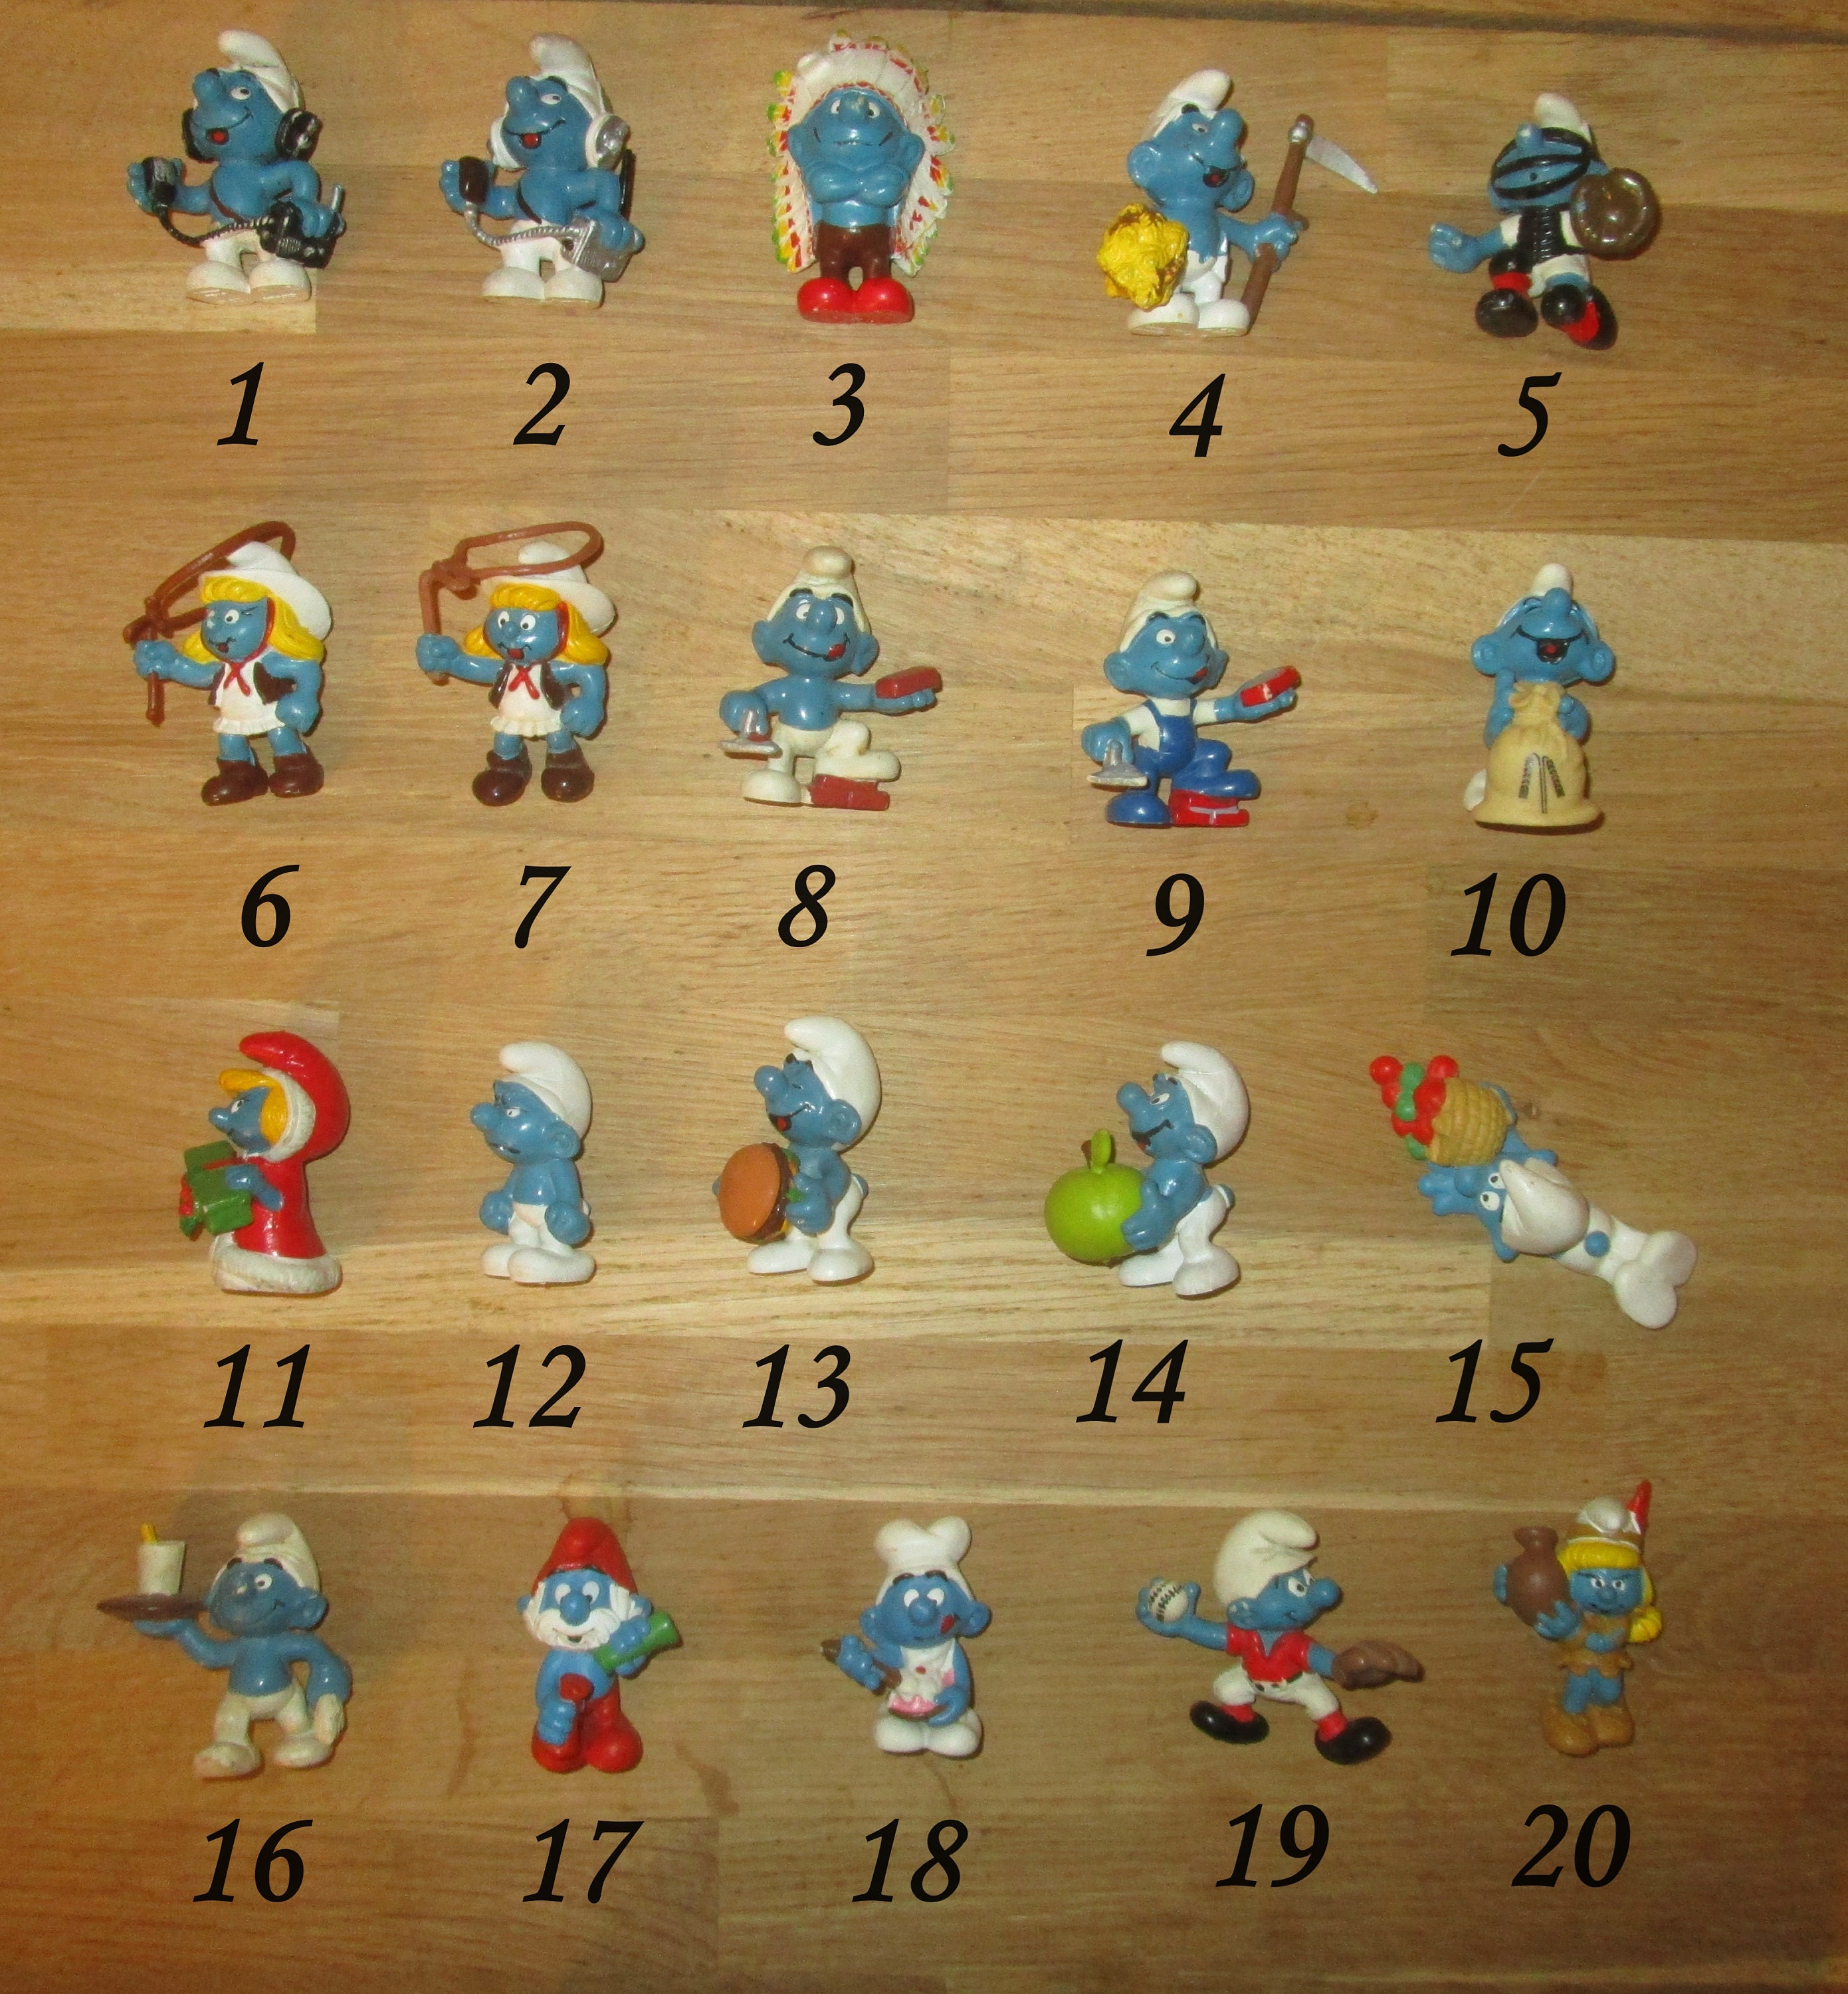 Buy the Bundle of 40+ Smurfs Figures